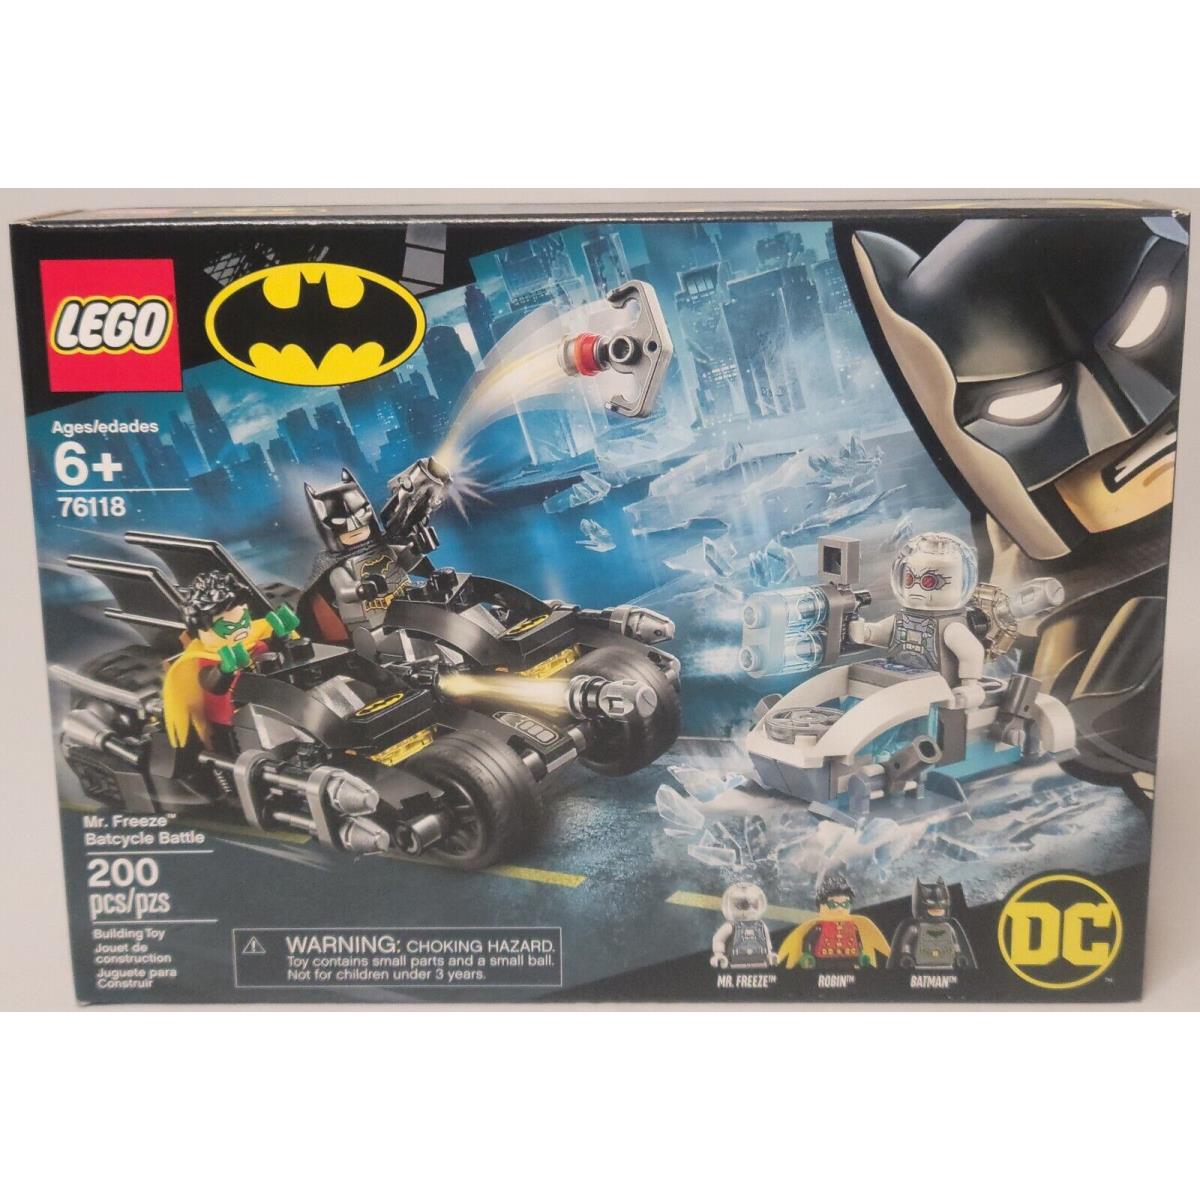 Lego 76118 Mr. Freeze Batcycle Battle Batman Robin DC Comics Super Heroes